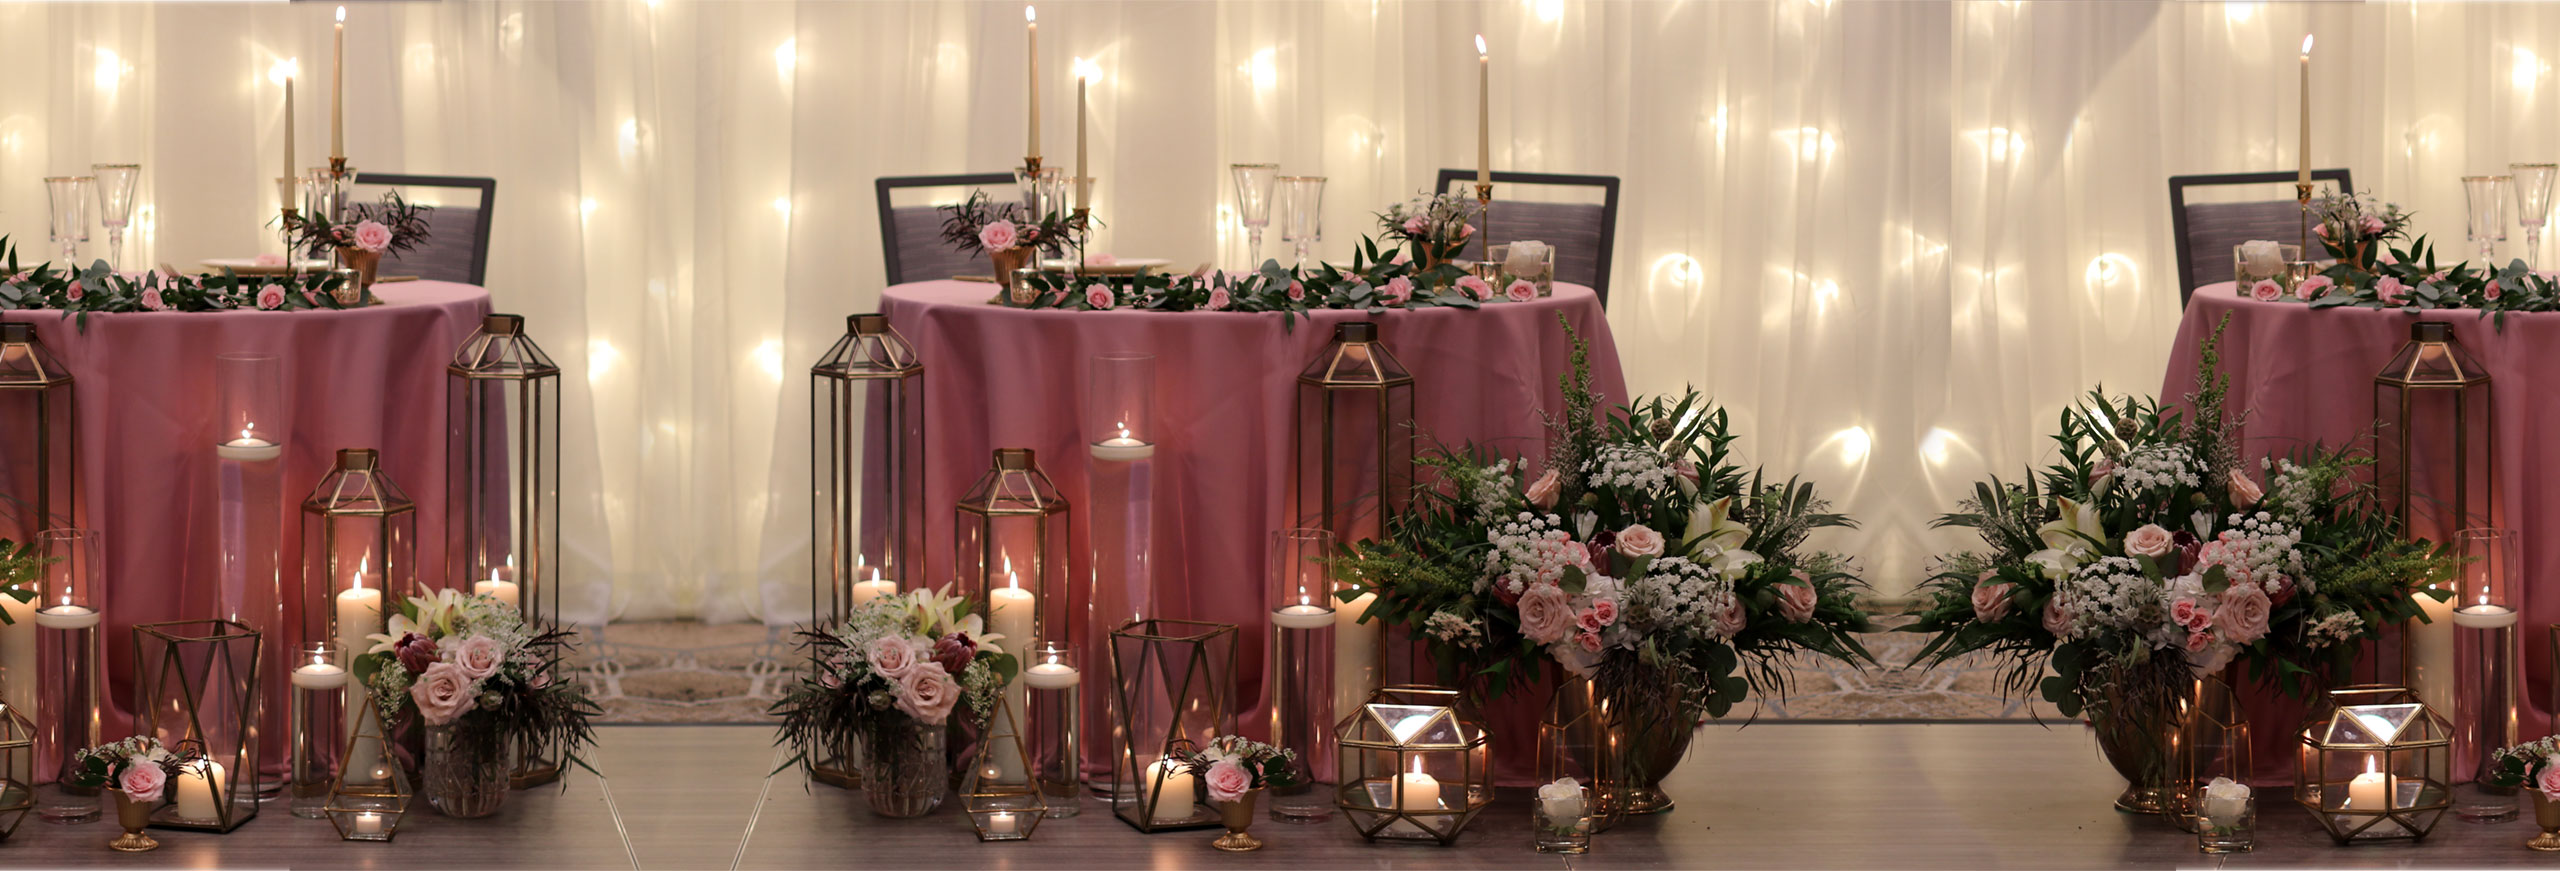 table setting decor